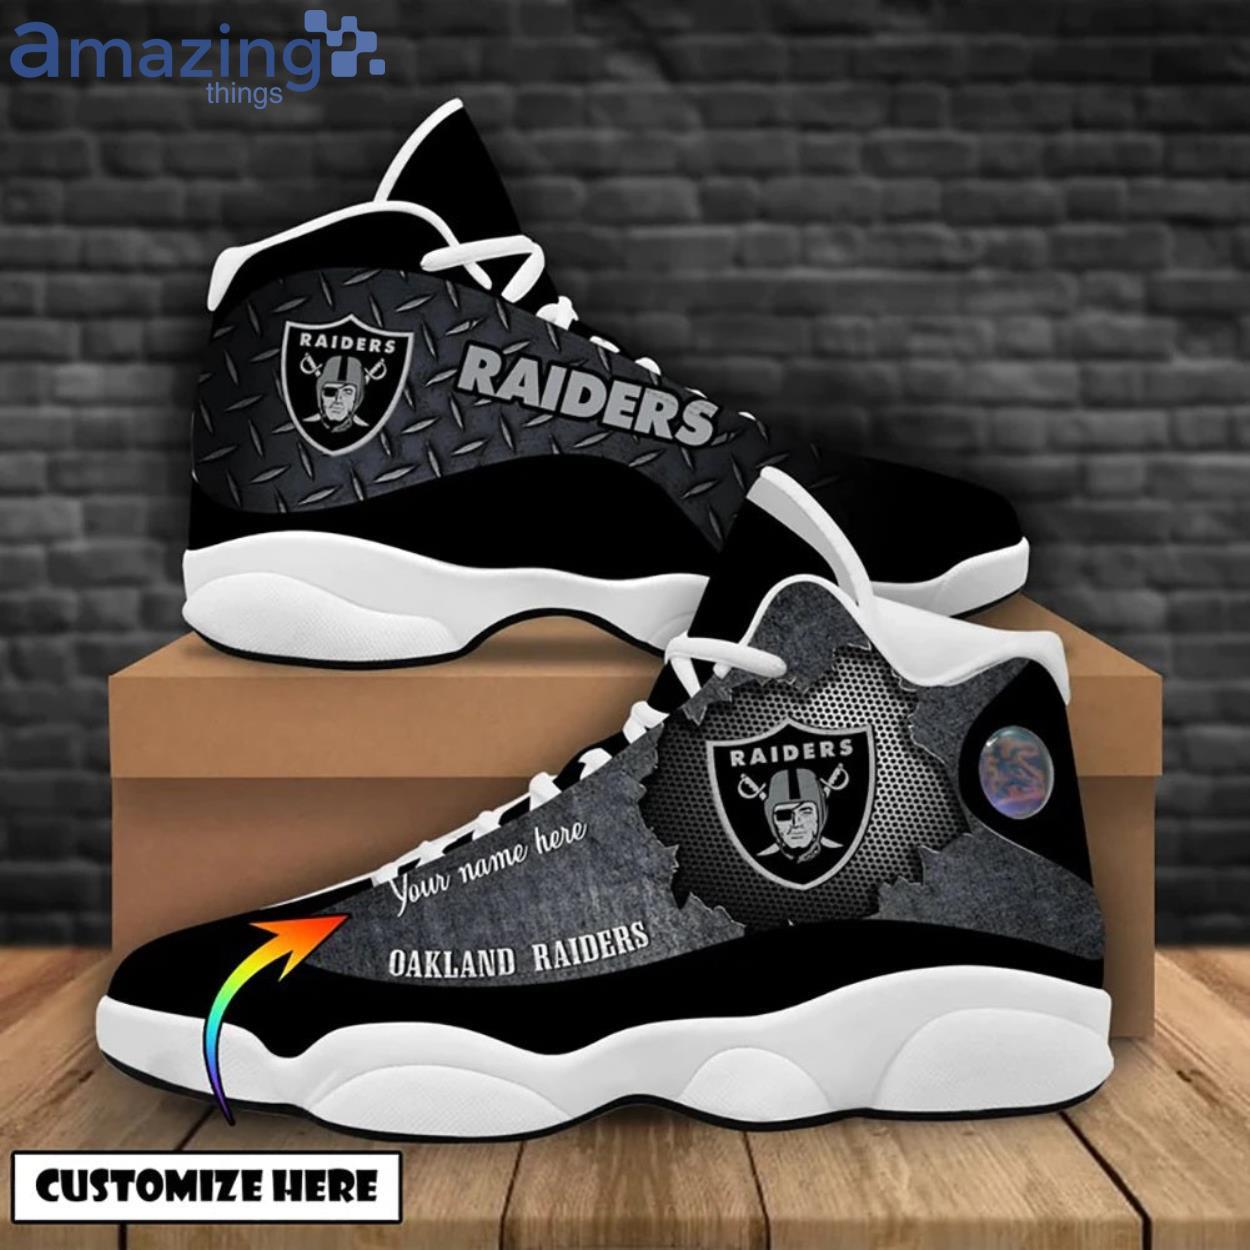 Las Vegas Raiders Jordans 13 Custom Name Personalized Shoes Flint -  Banantees